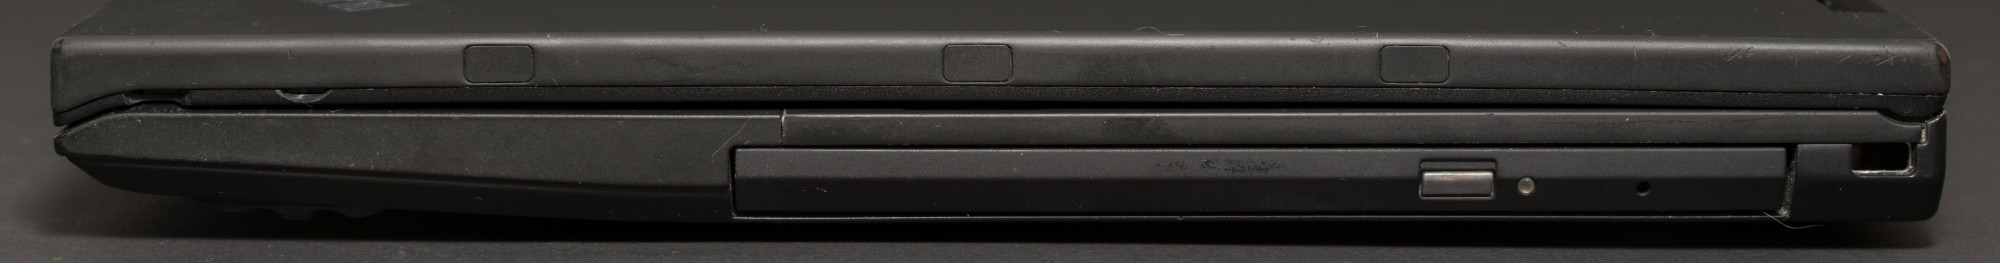 Древности: десять лет эволюции ноутбуков на примере ThinkPad X301 - 5